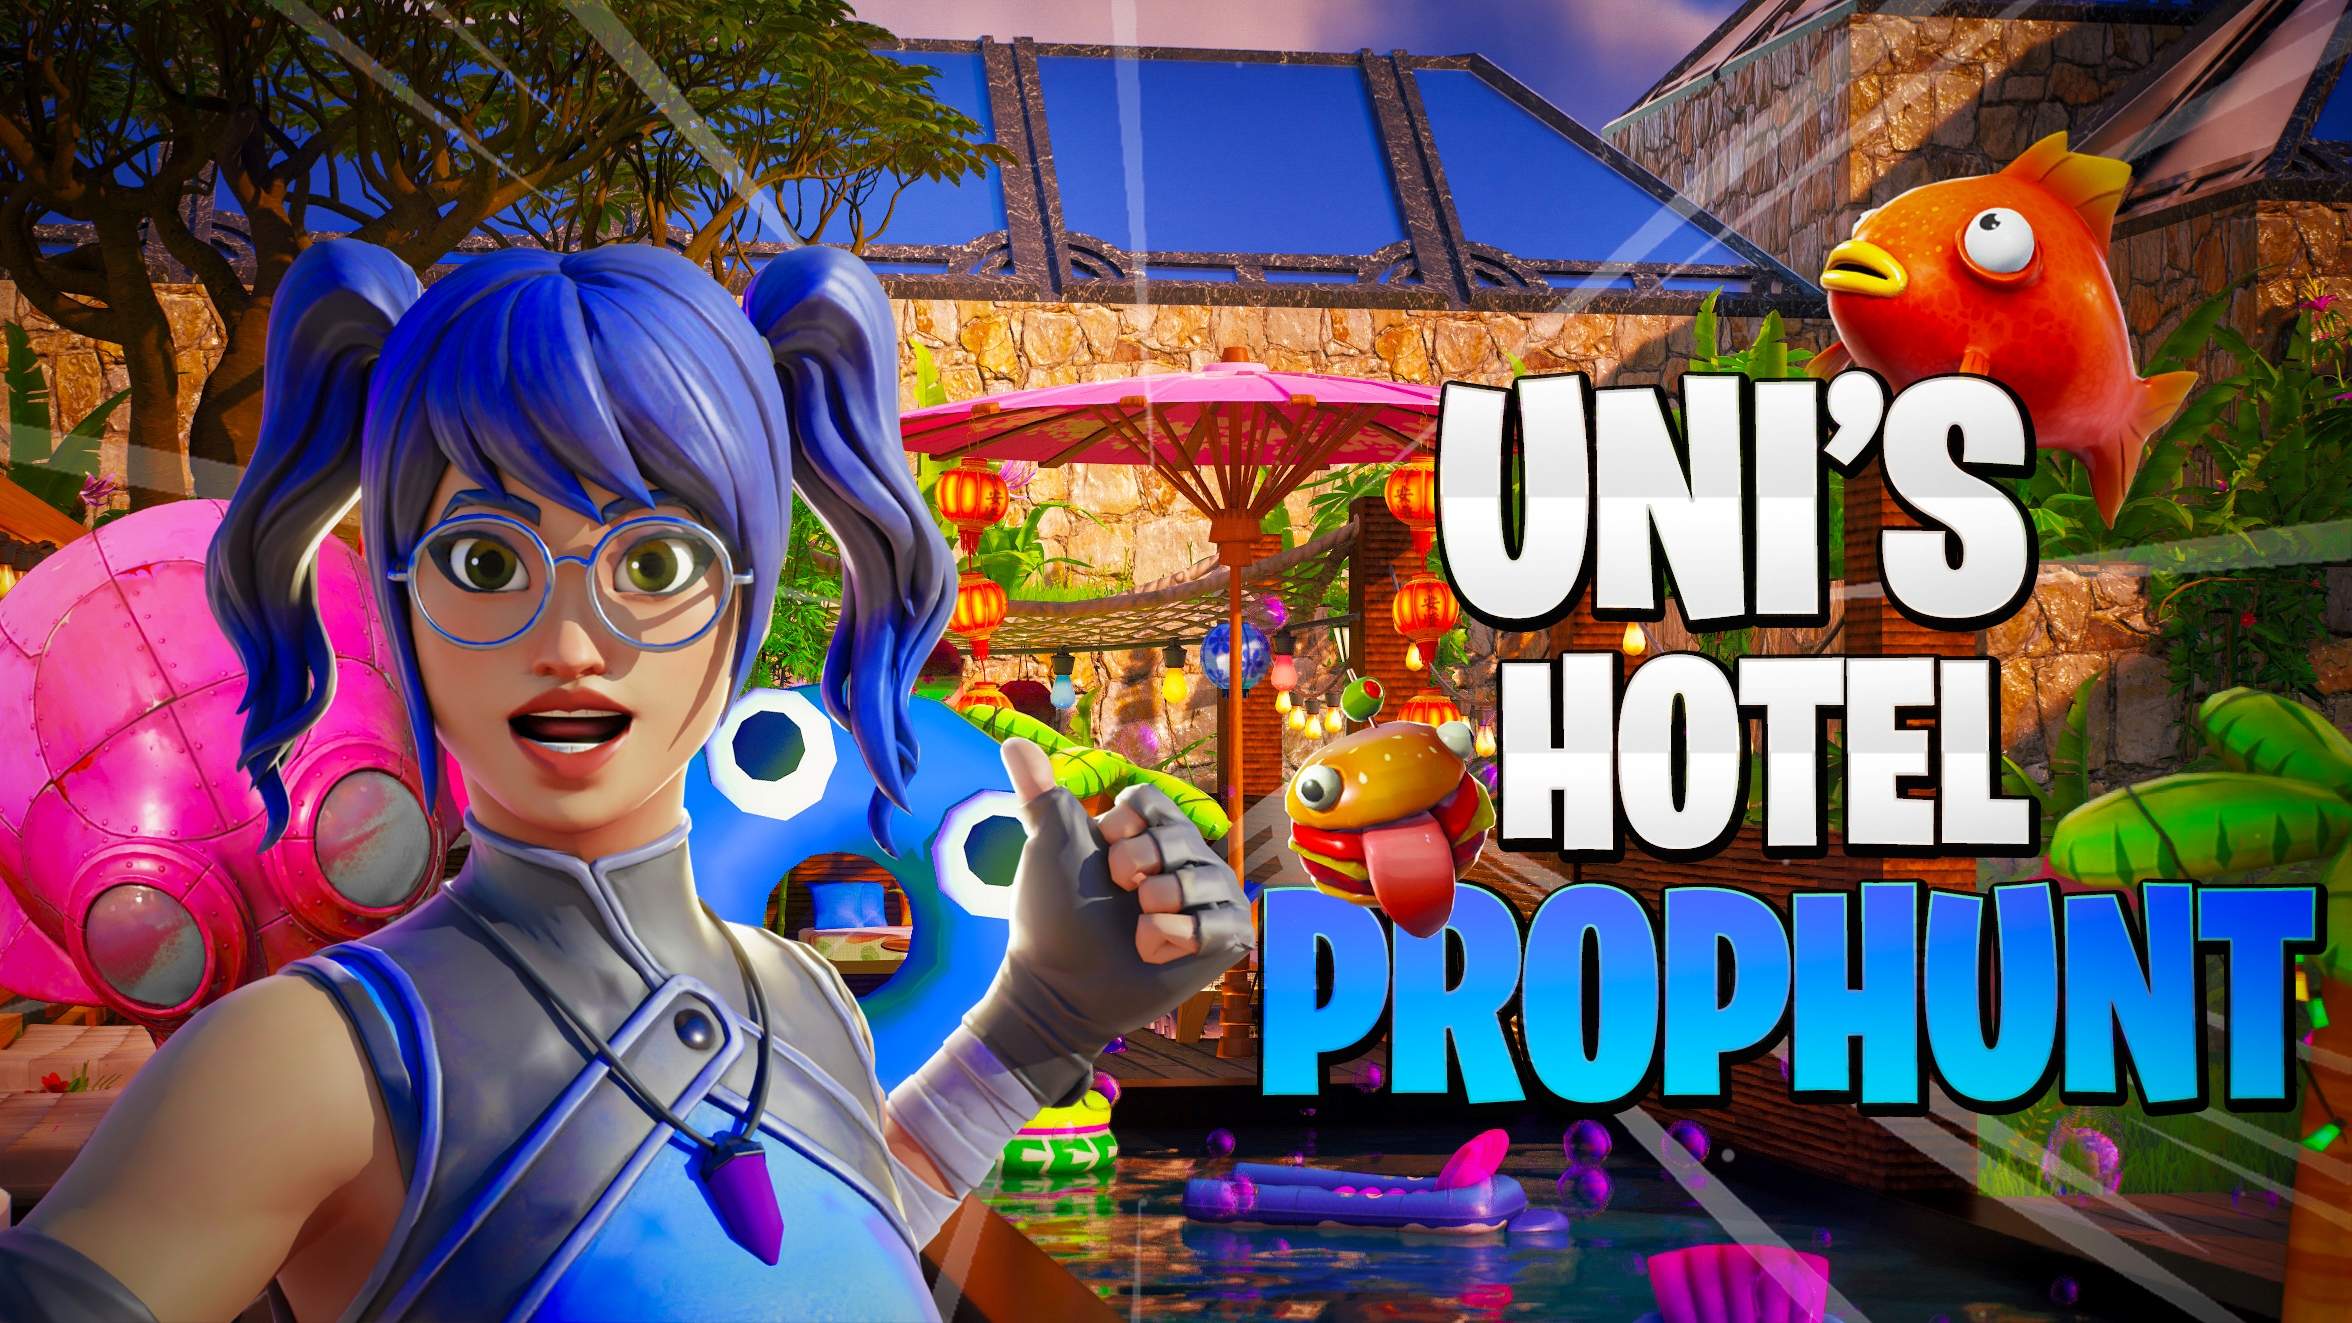 UNI'S HOTEL PROPHUNT